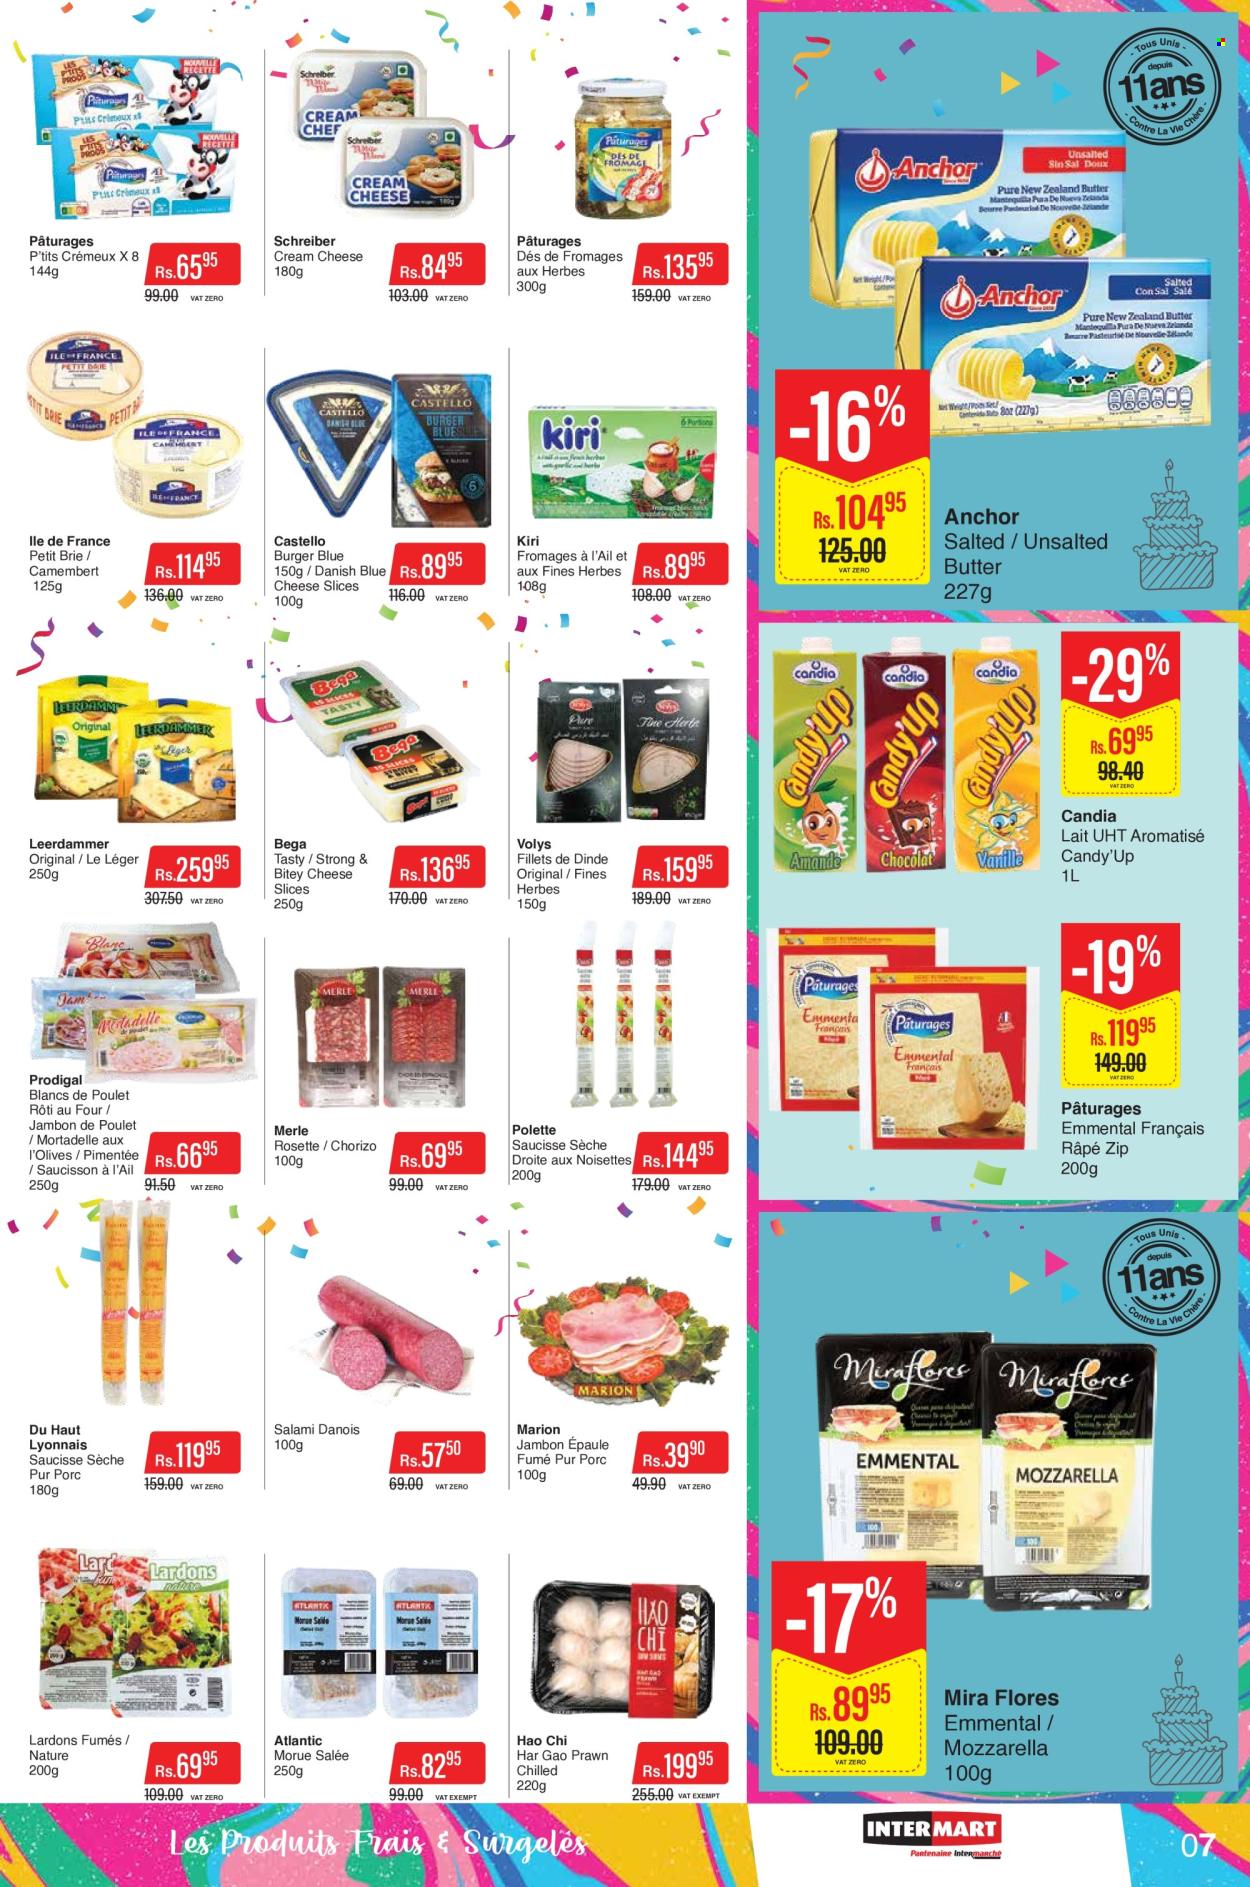 <magasin> - <du DD/MM/YYYY au DD/MM/YYYY> - Produits soldés - ,<products from flyers>. Page 7. 